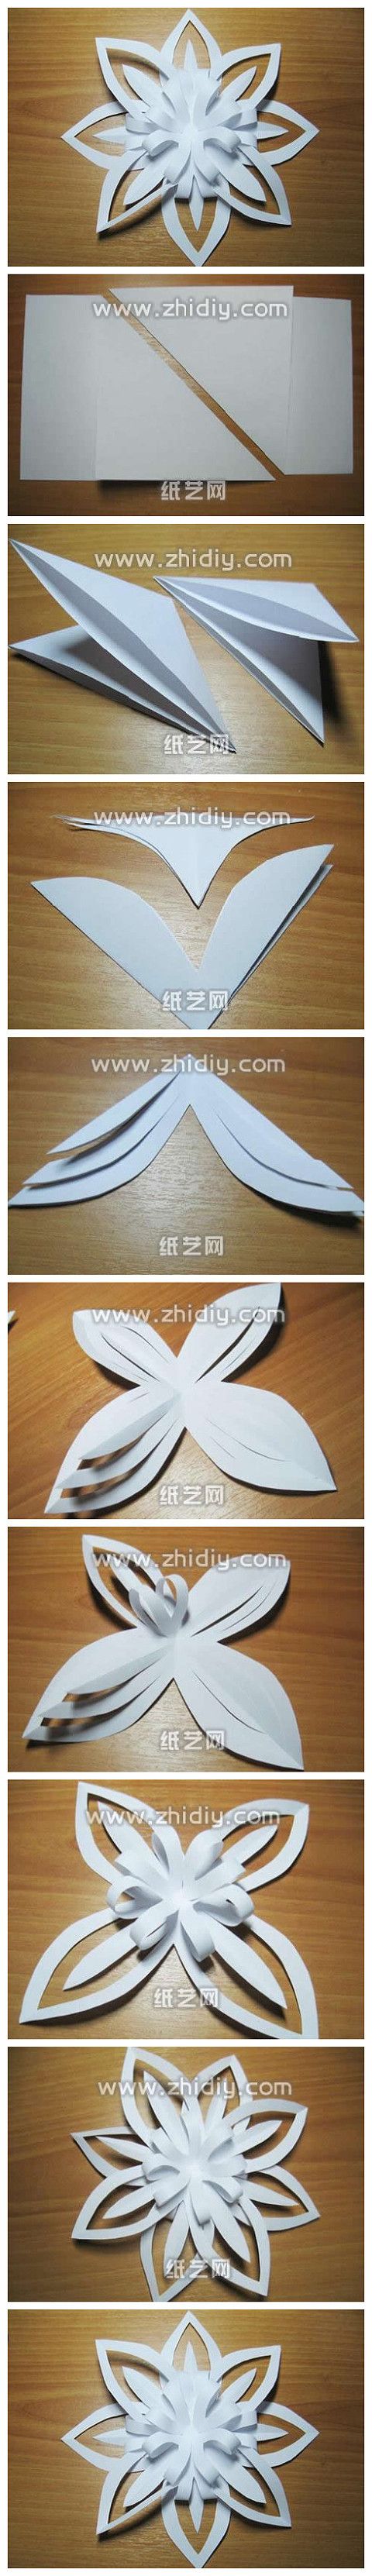 3-D paper snowflake